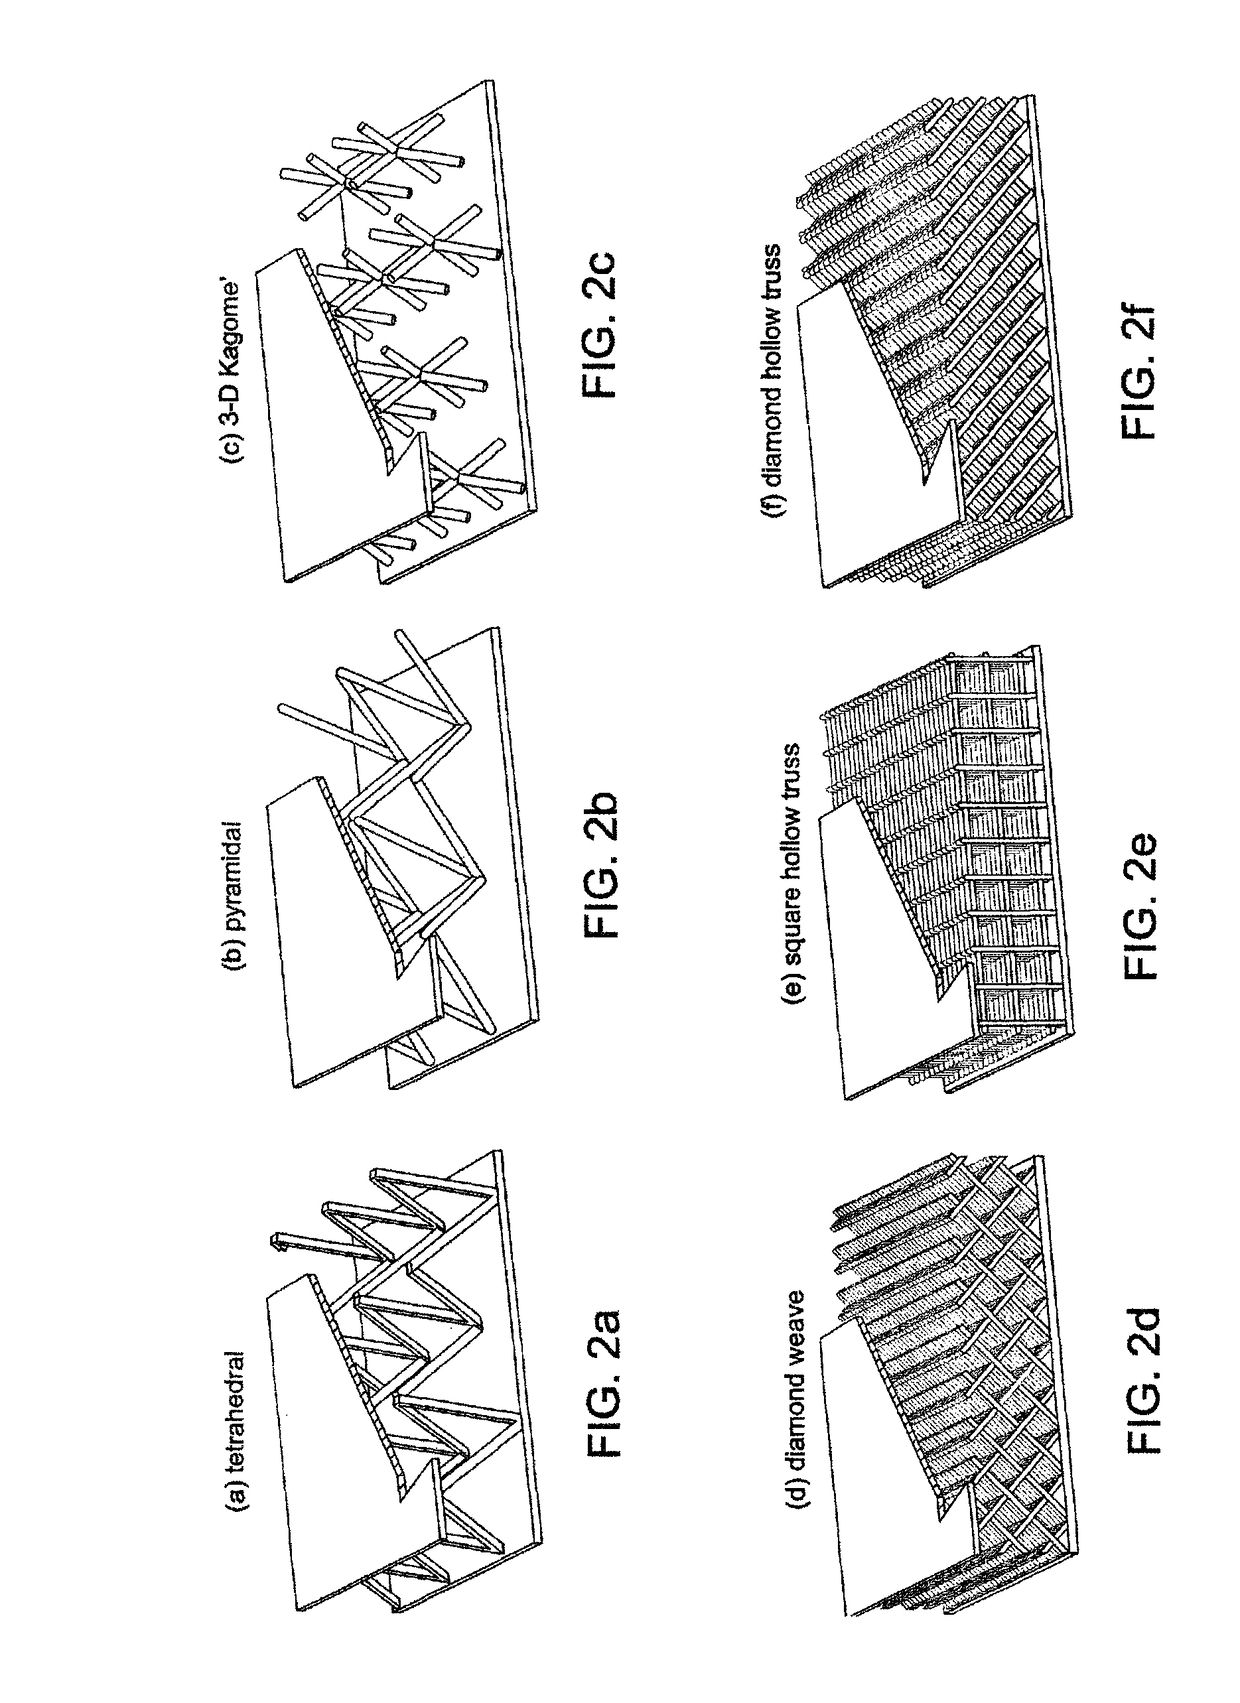 Heat-managing composite structures